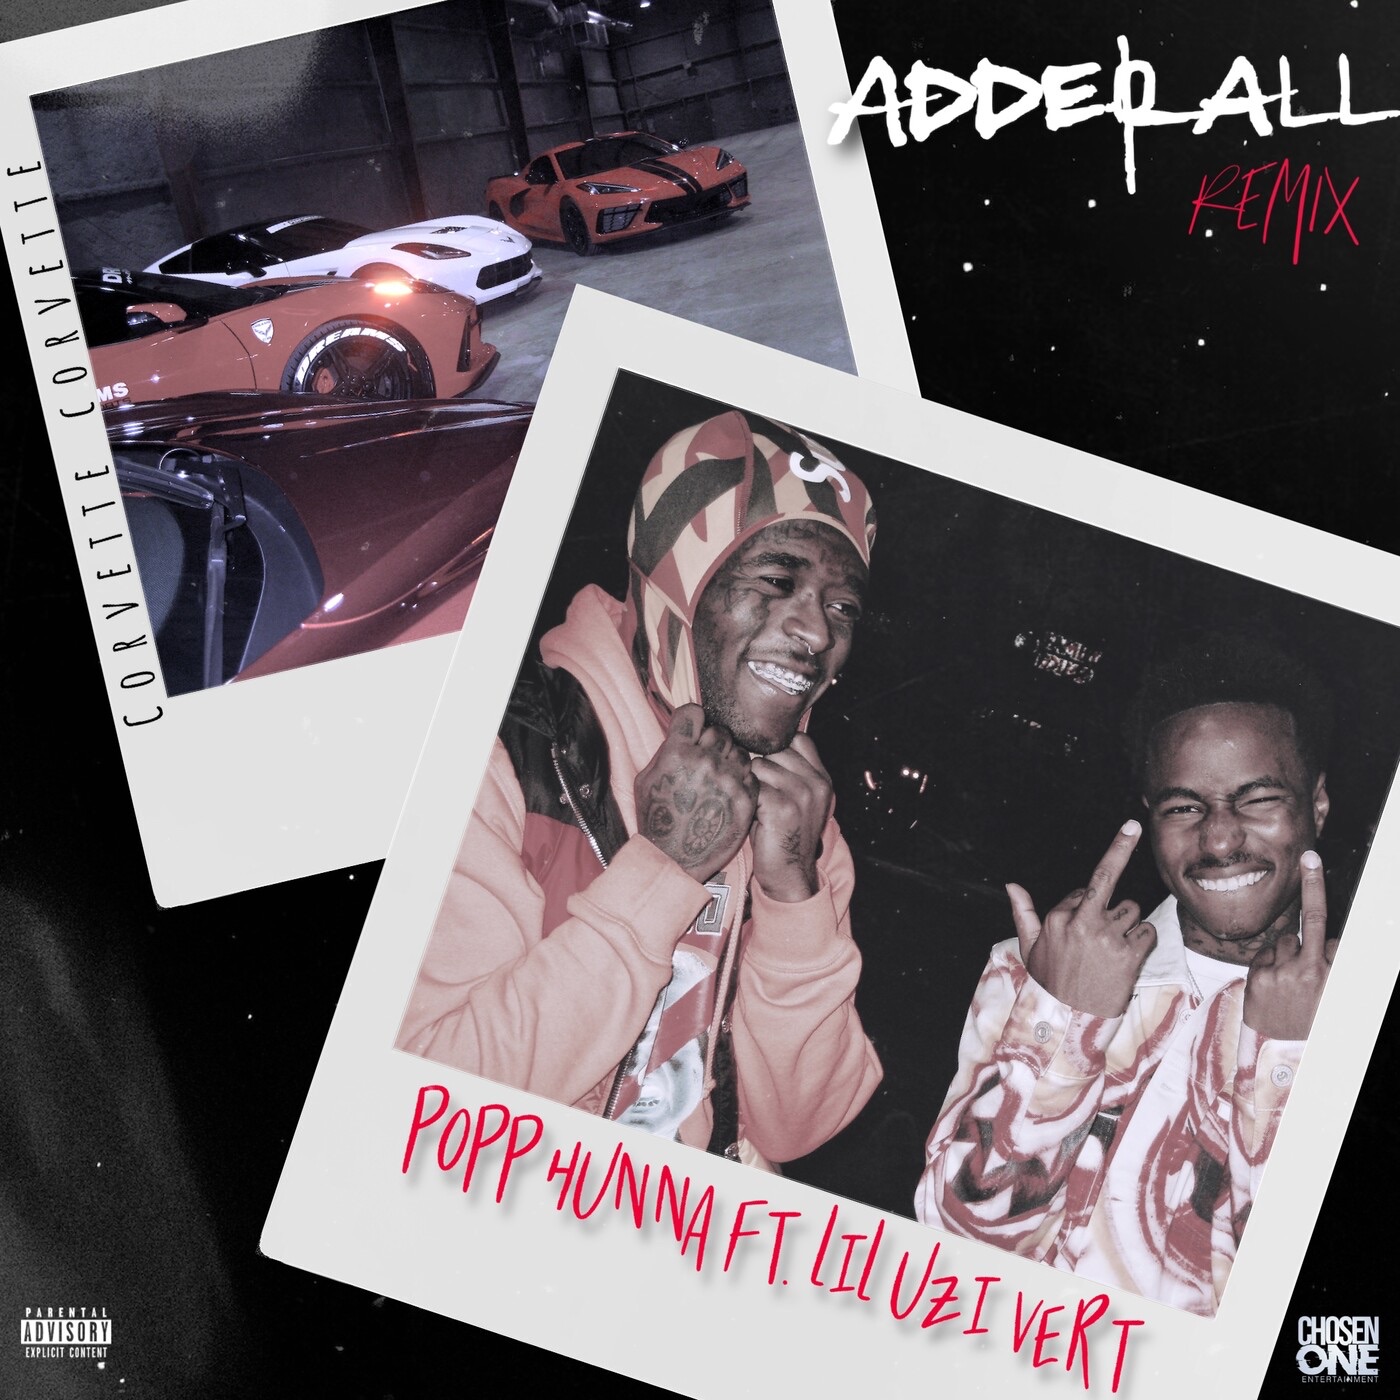 Popp Hunna - Adderall (Corvette Corvette) [Remix] [feat. Lil Uzi Vert] - Single